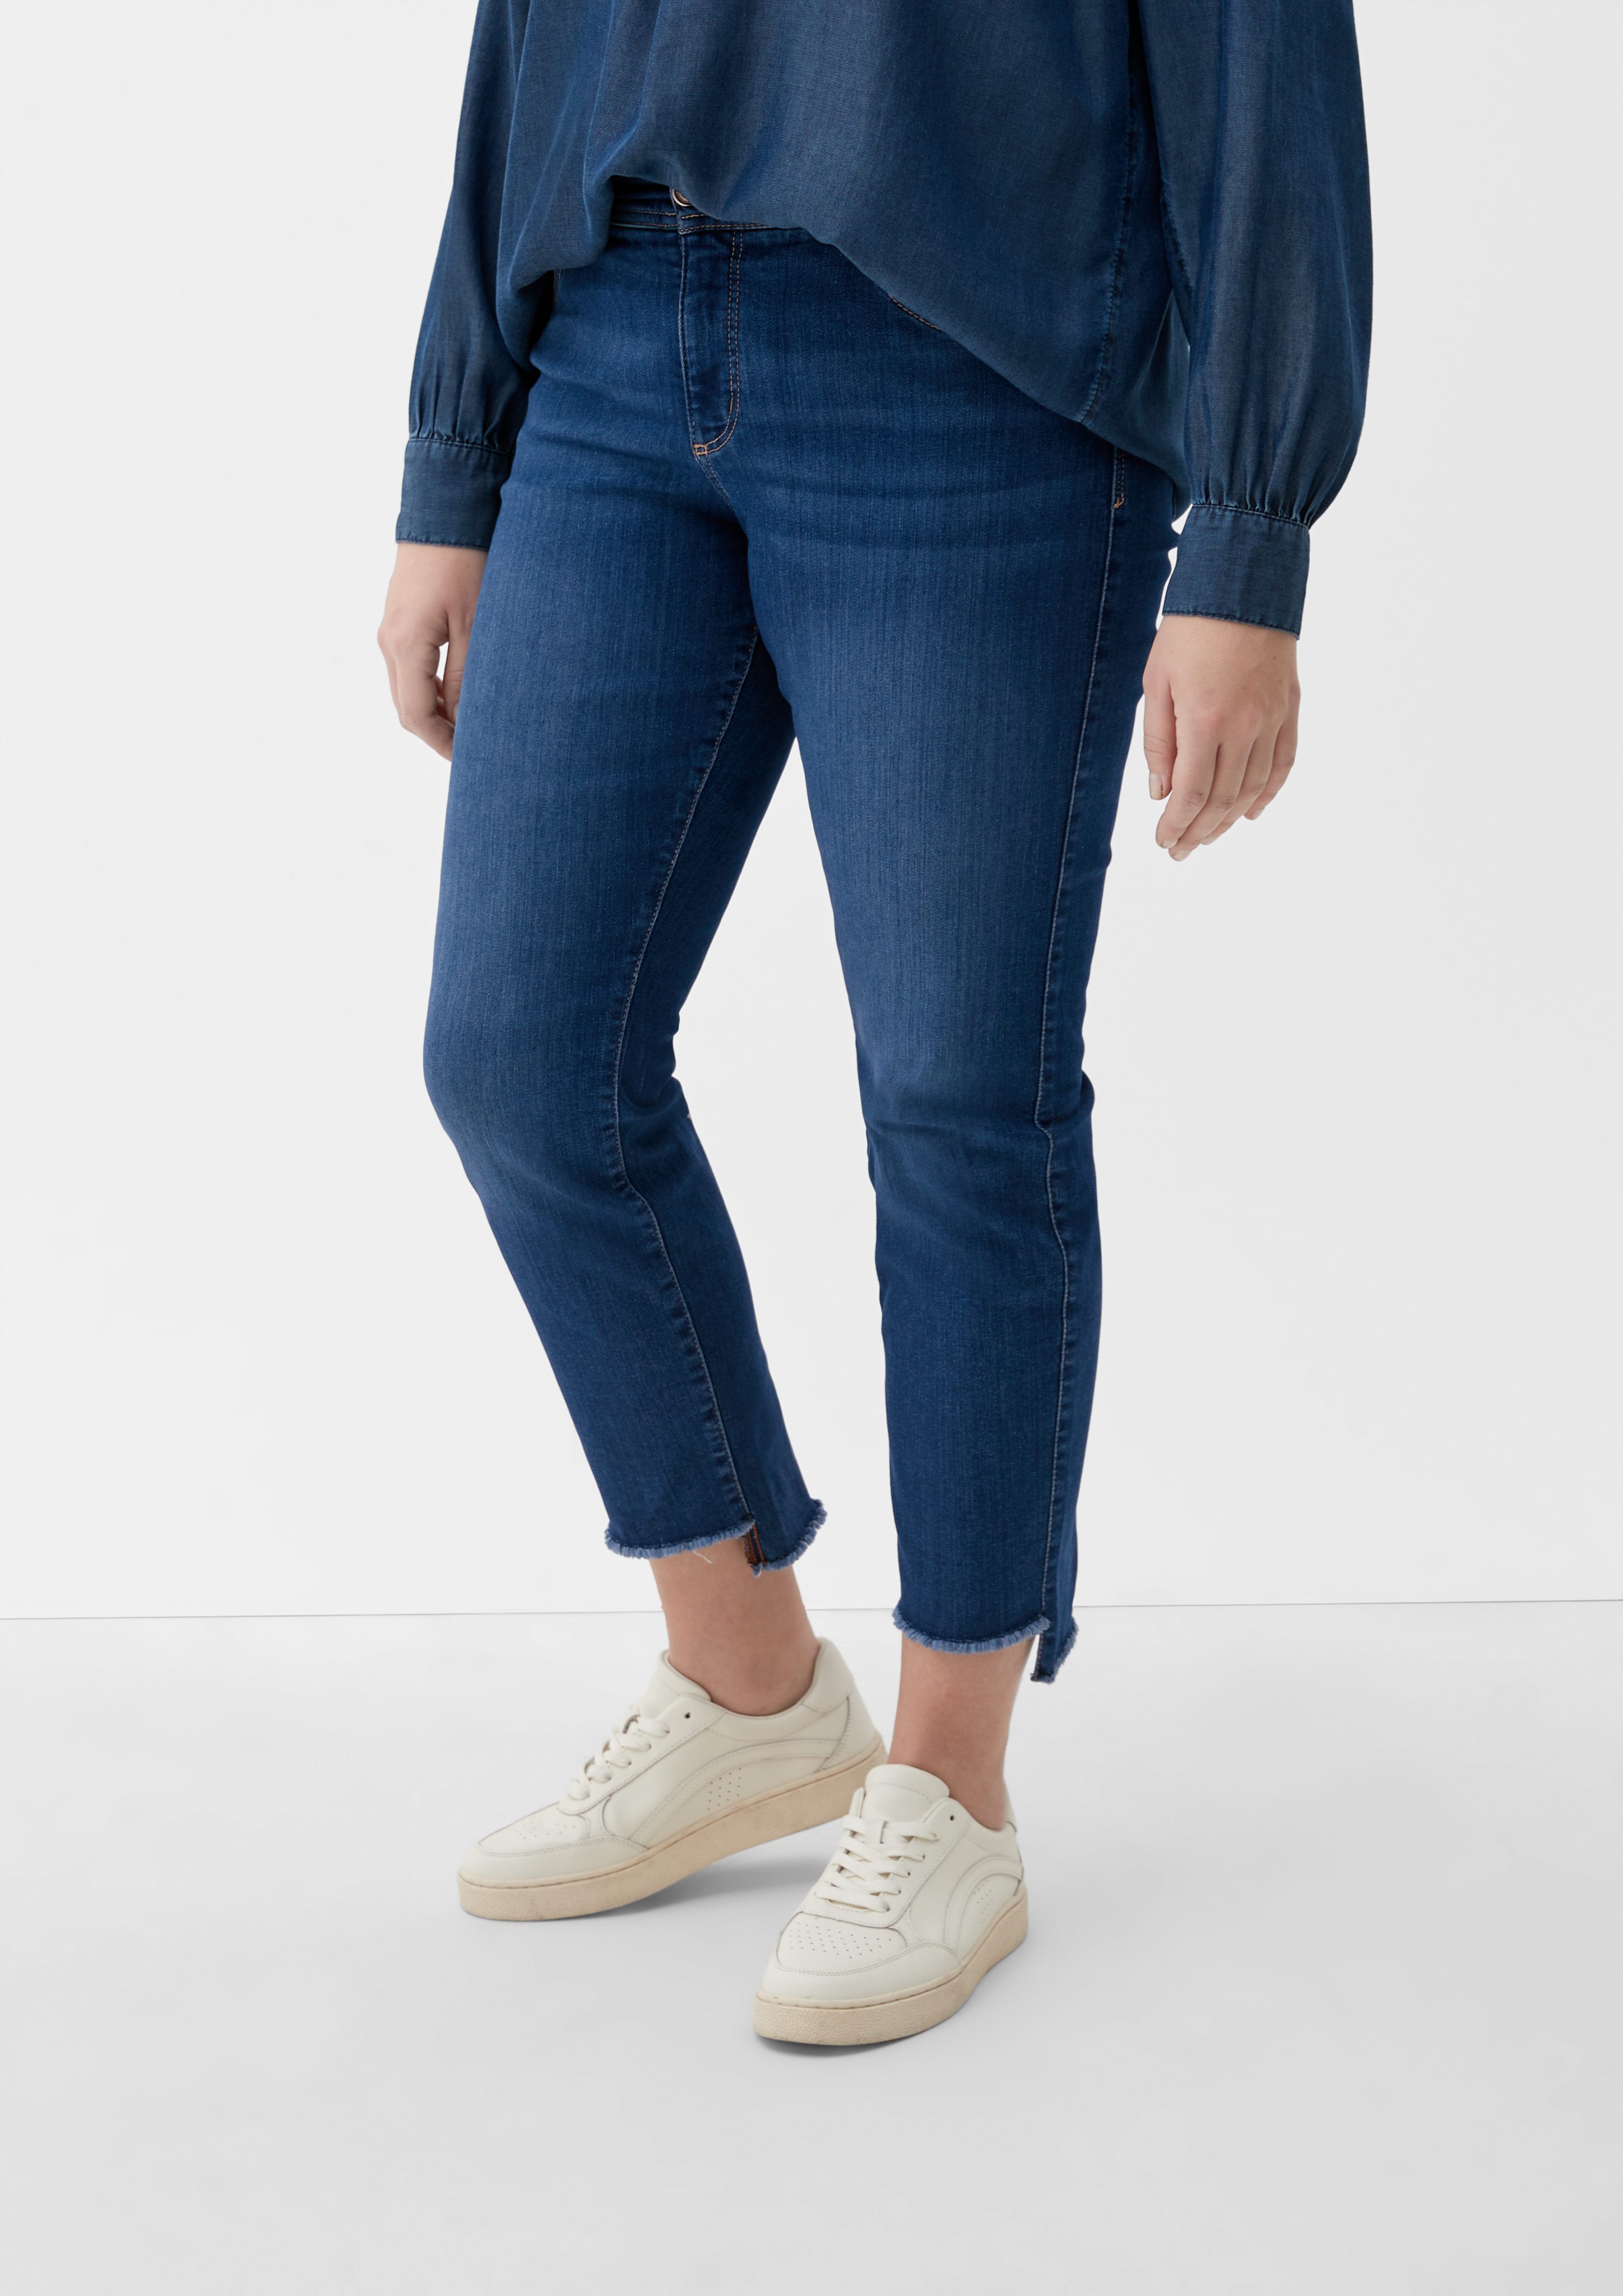 TRIANGLE Stoffhose Jeans / Slim Fit / Mid Rise / Slim Leg Waschung, Stickerei, Fransen dunkelblau